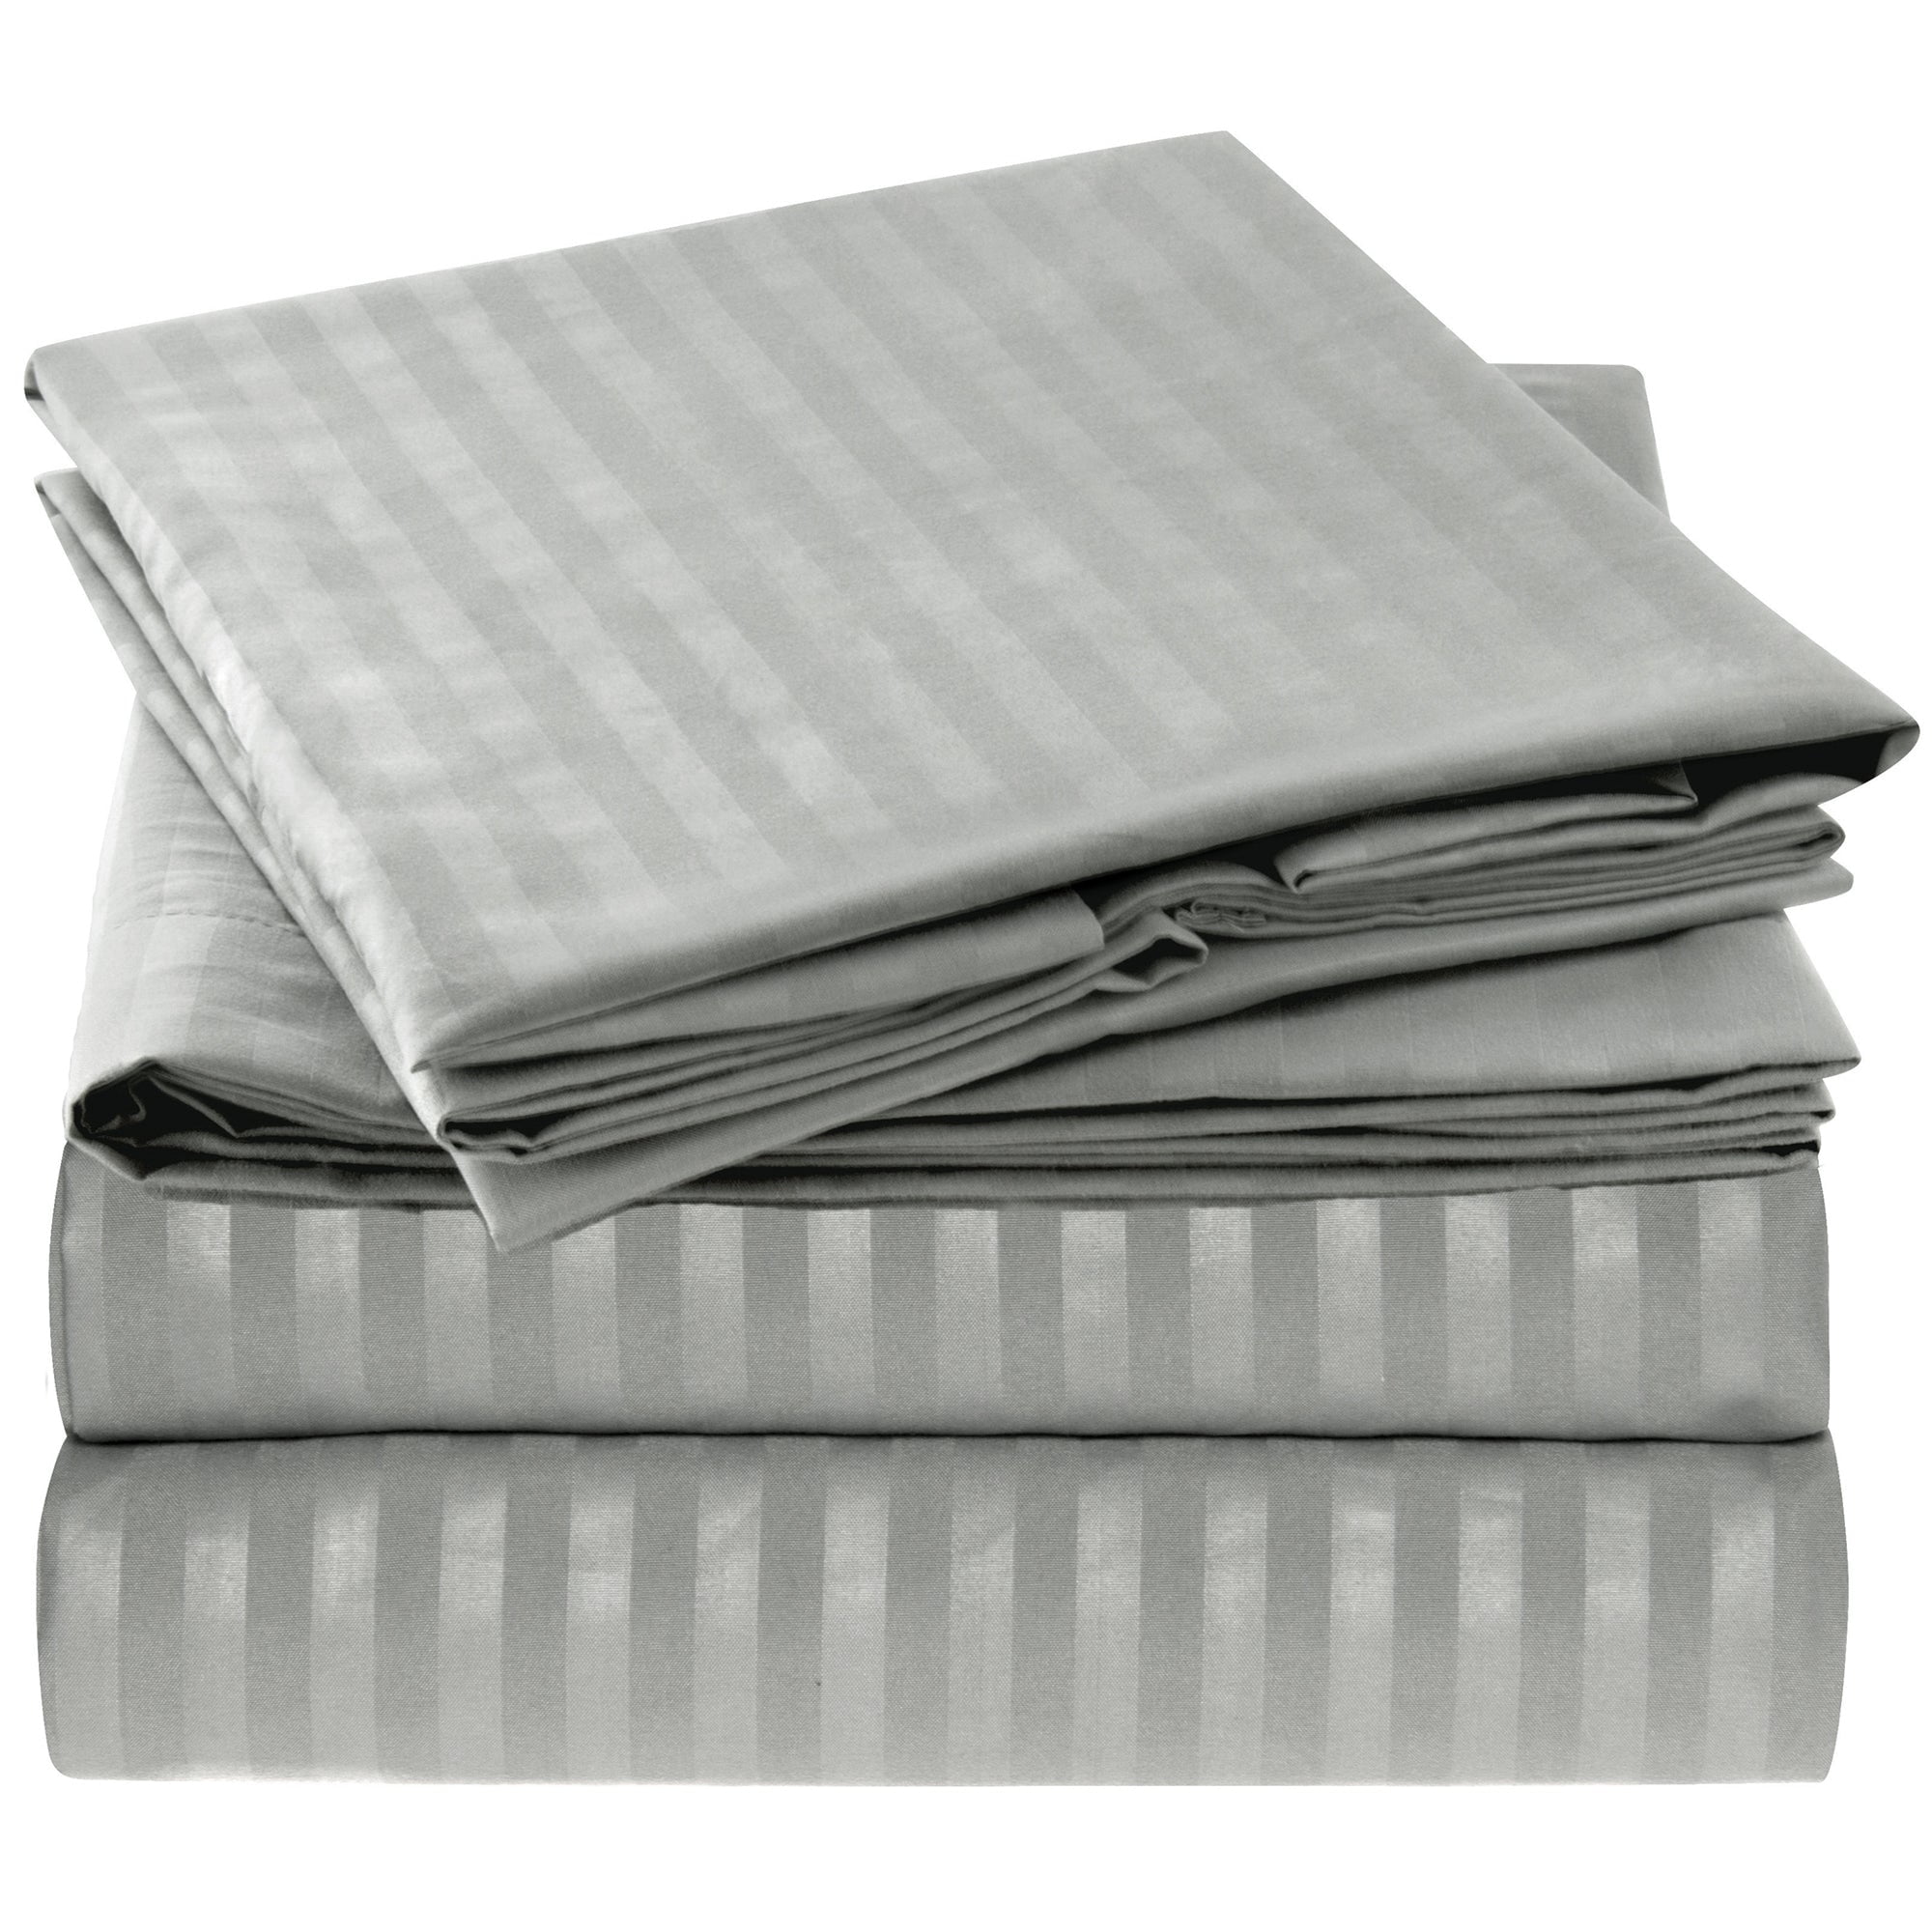 Mellanni Striped Bed Sheet Set, Brushed Microfiber 1800 Bedding, Deep  Pocket Sheet, 4 Piece, Cal King, Gray / Silver - Walmart.com